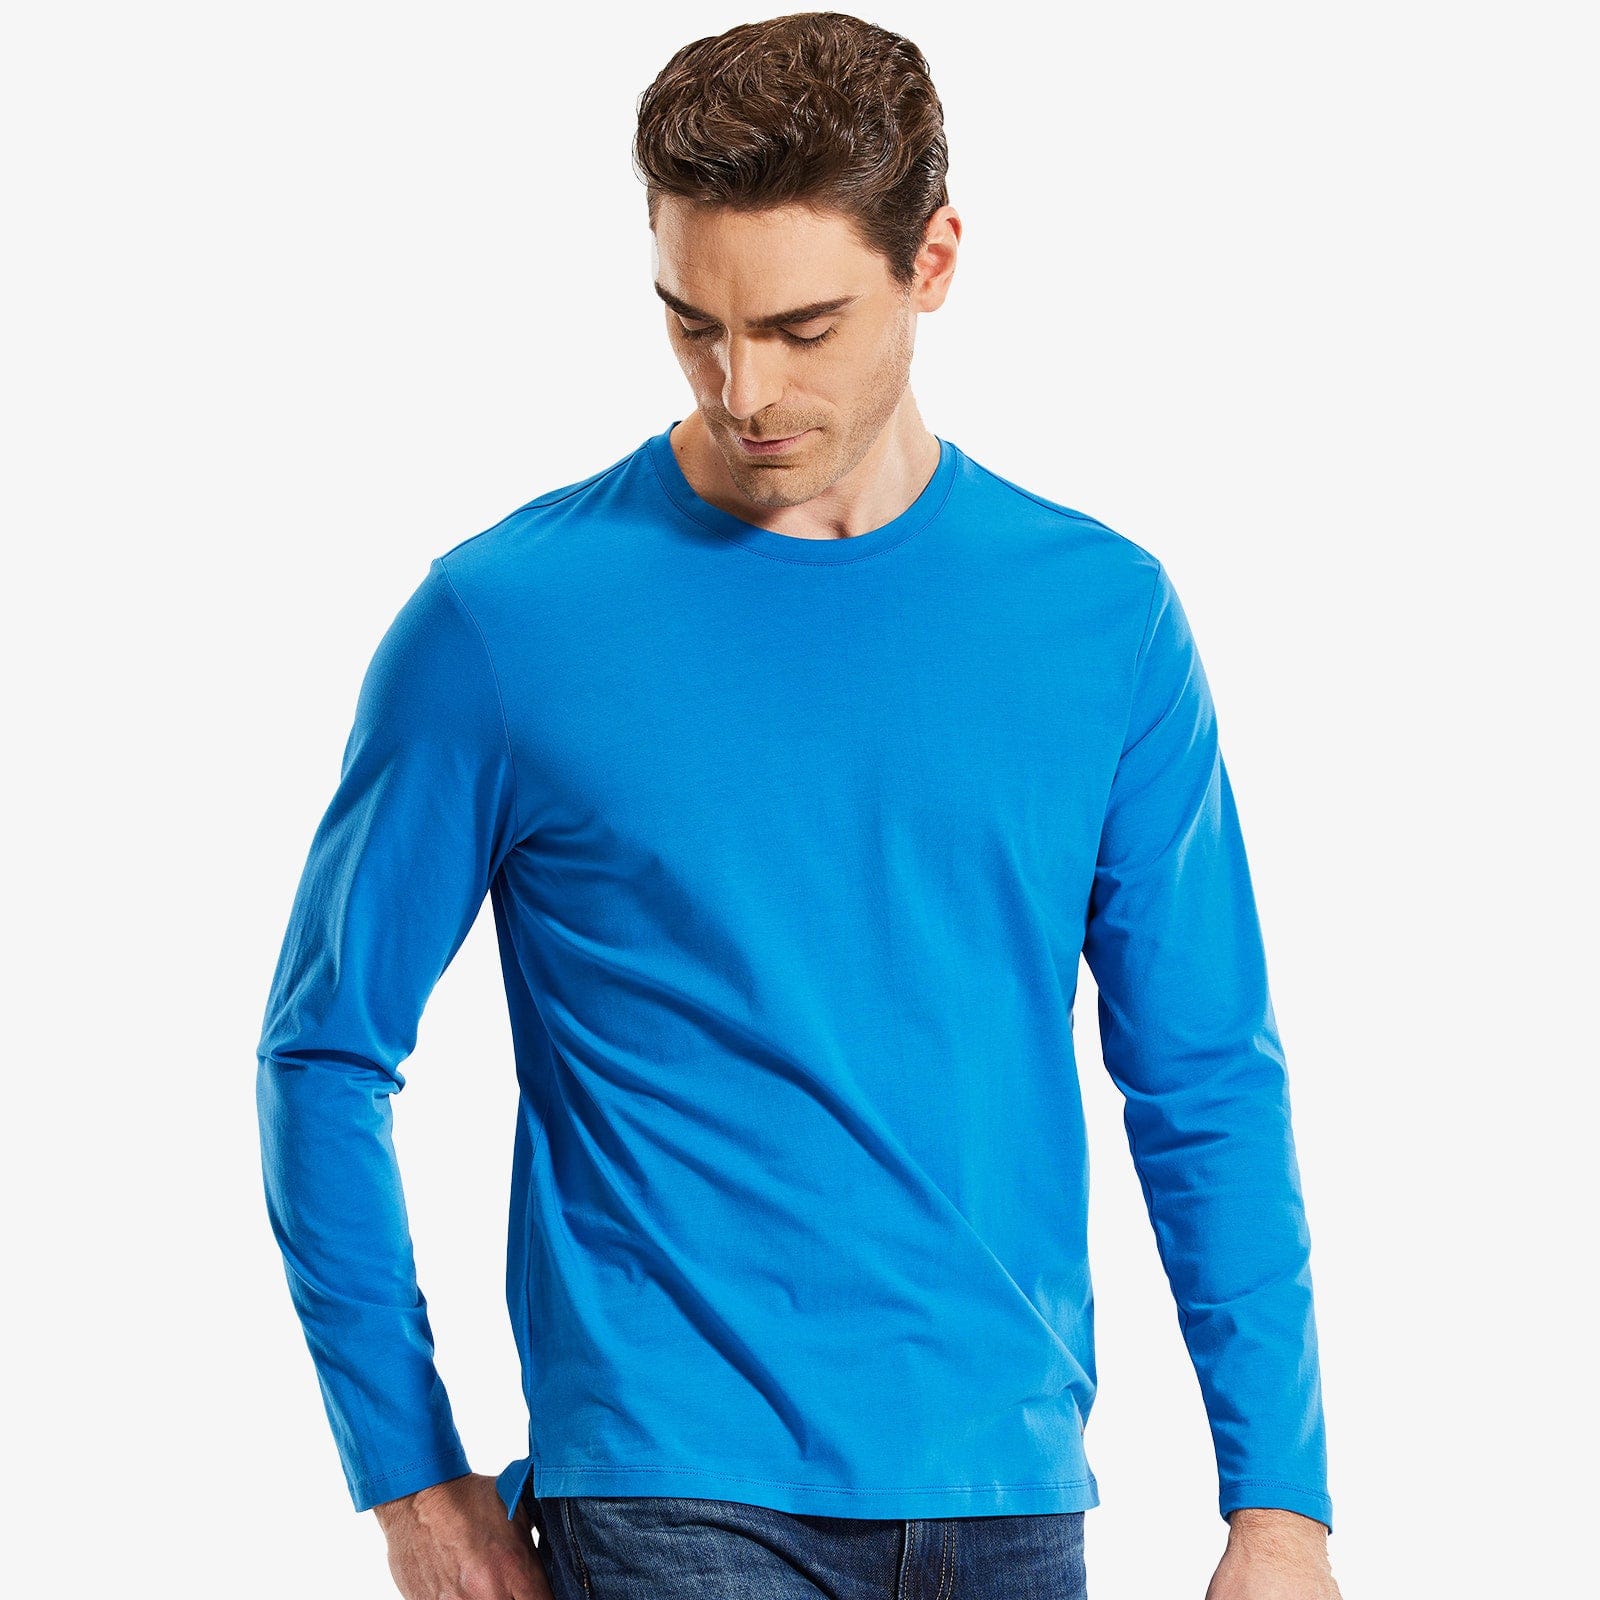 Blue T-shirts for Men